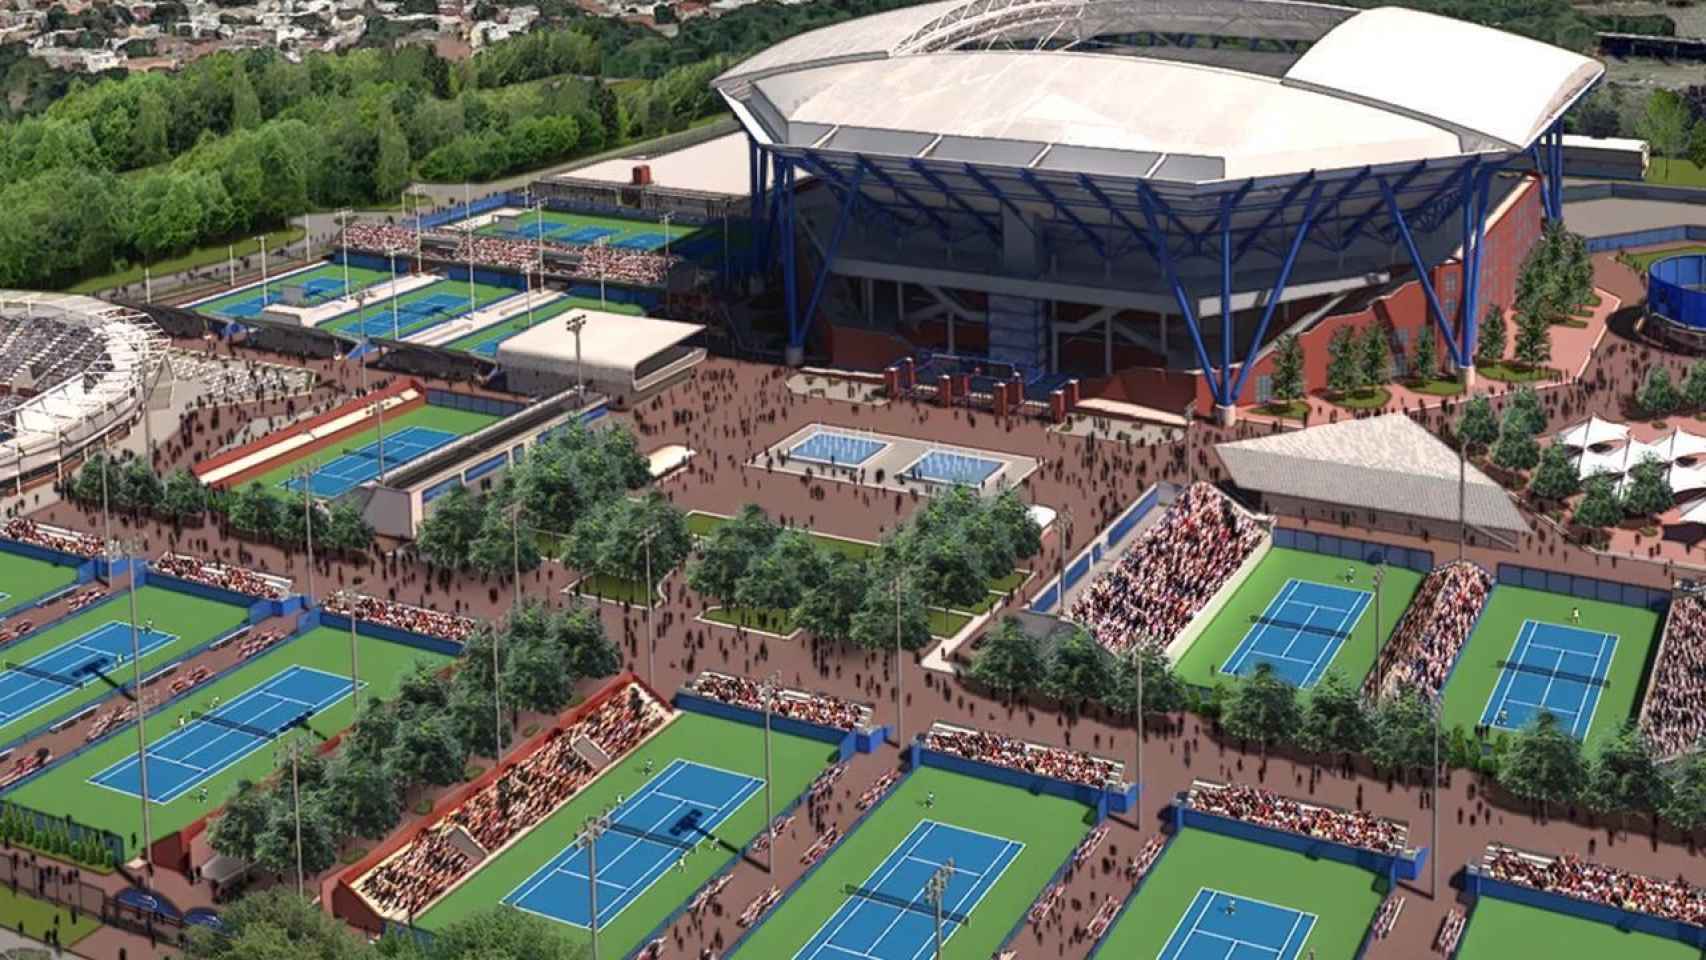 USTA Billie Jean King National Tennis Center